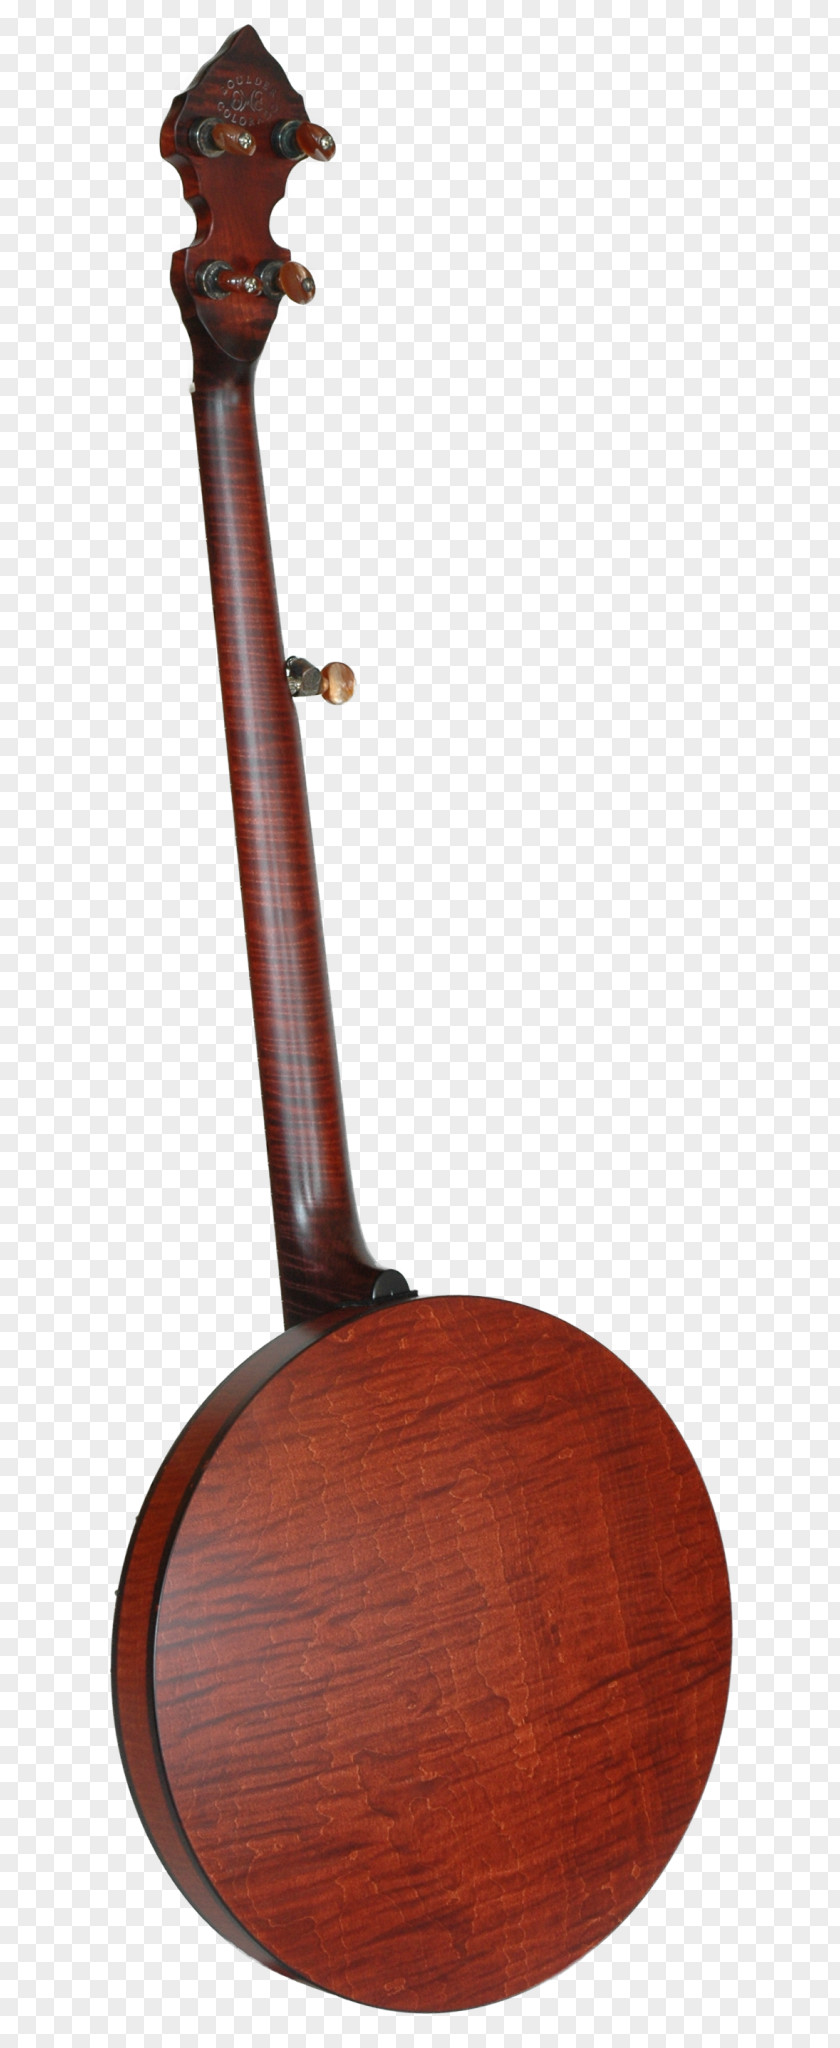 Musical Instruments Banjo Tanbur String PNG